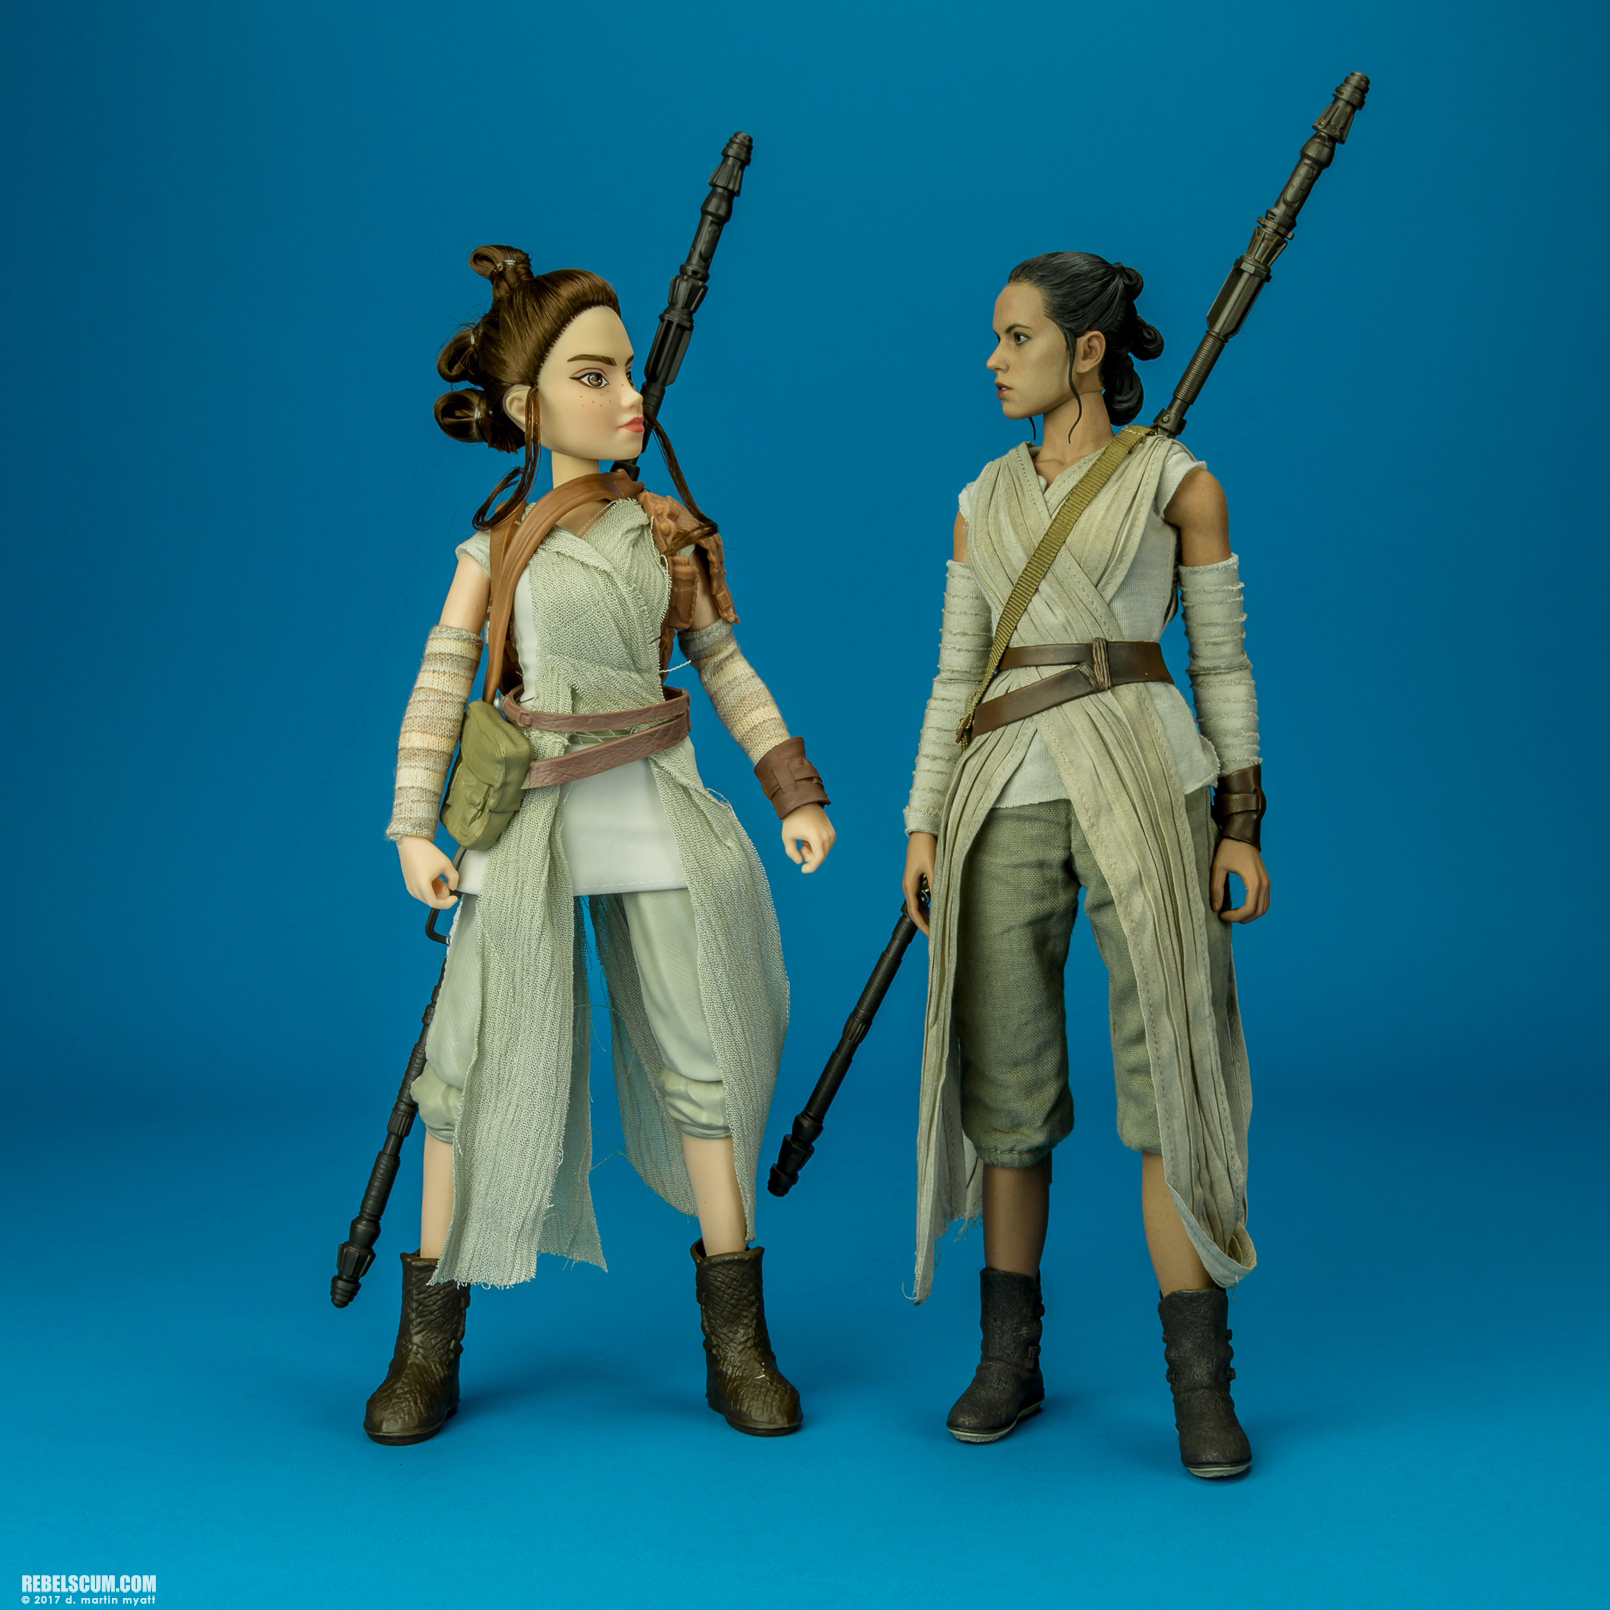 Forces-Of-Destiny-Rey-Of-Jakku-Star-Wars-Hasbro-008.jpg